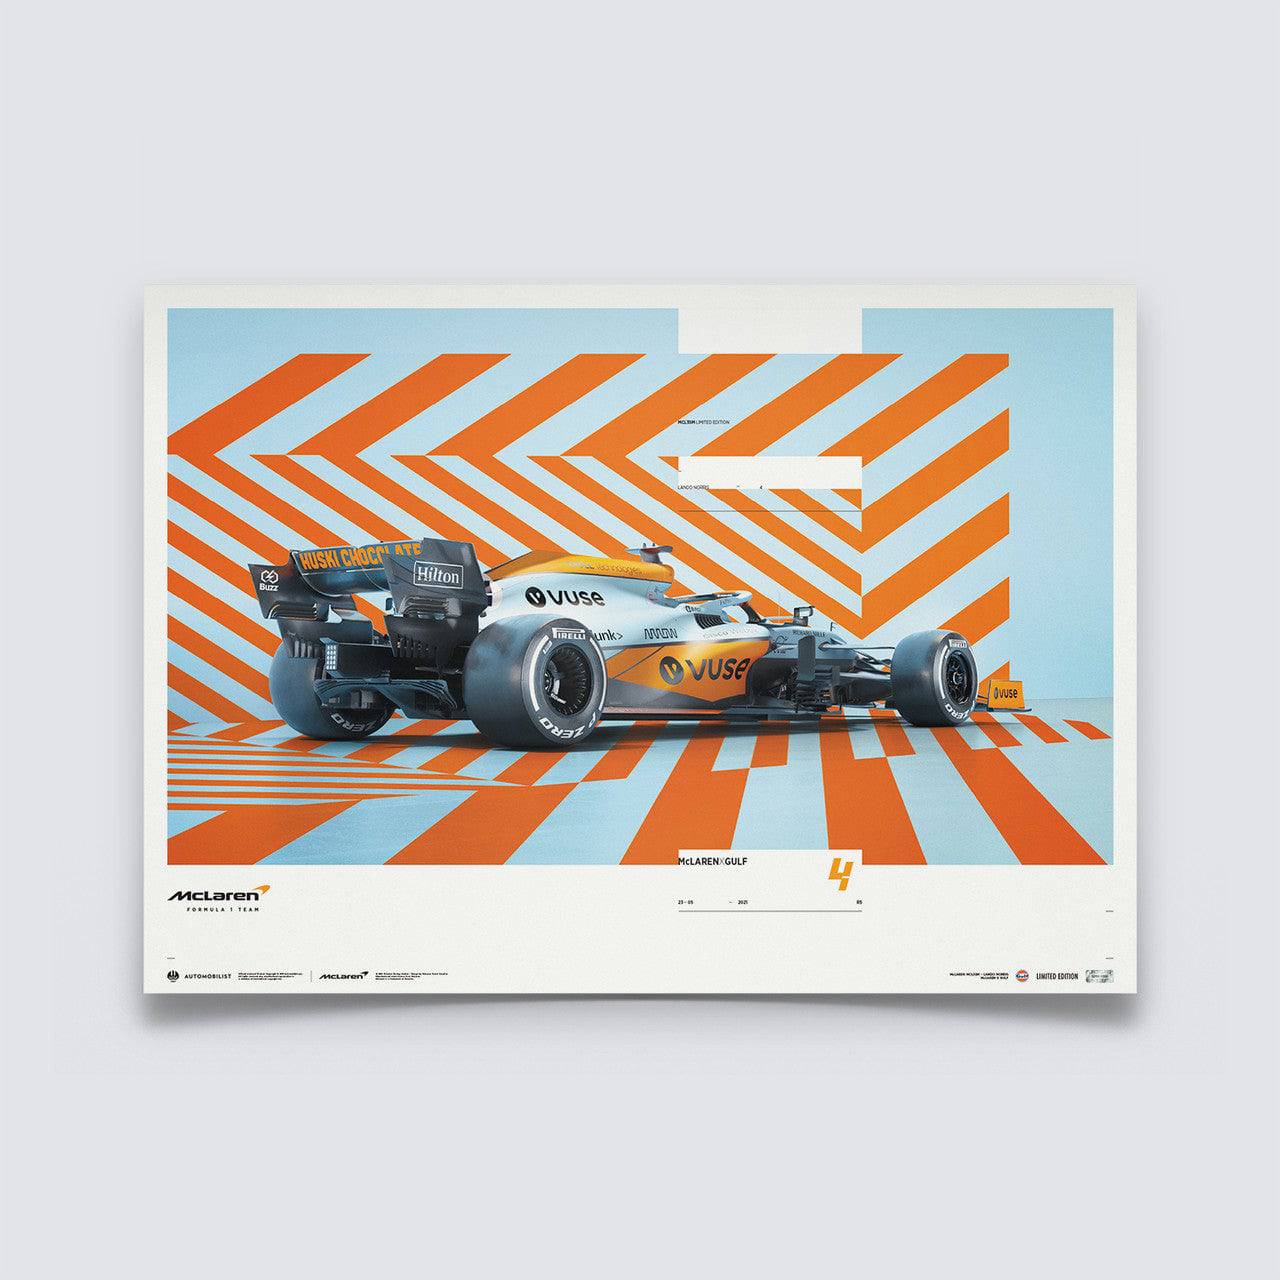 McLaren x Gulf - Lando Norris - Horizontal - 2021 | Limited Edition